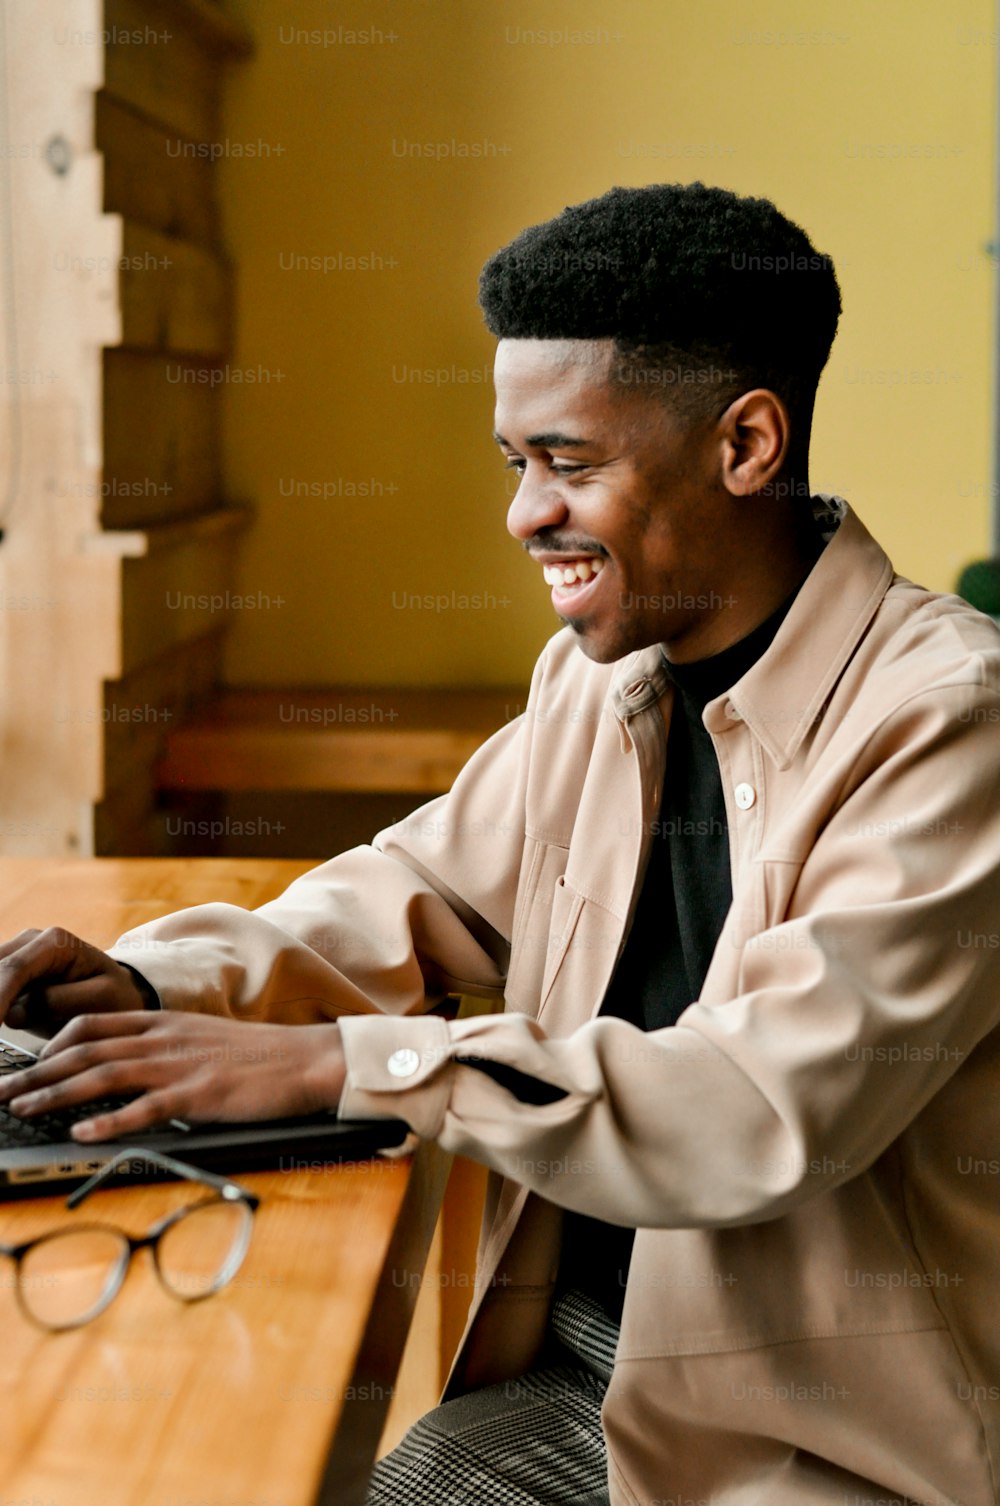 Un uomo che usa un computer portatile